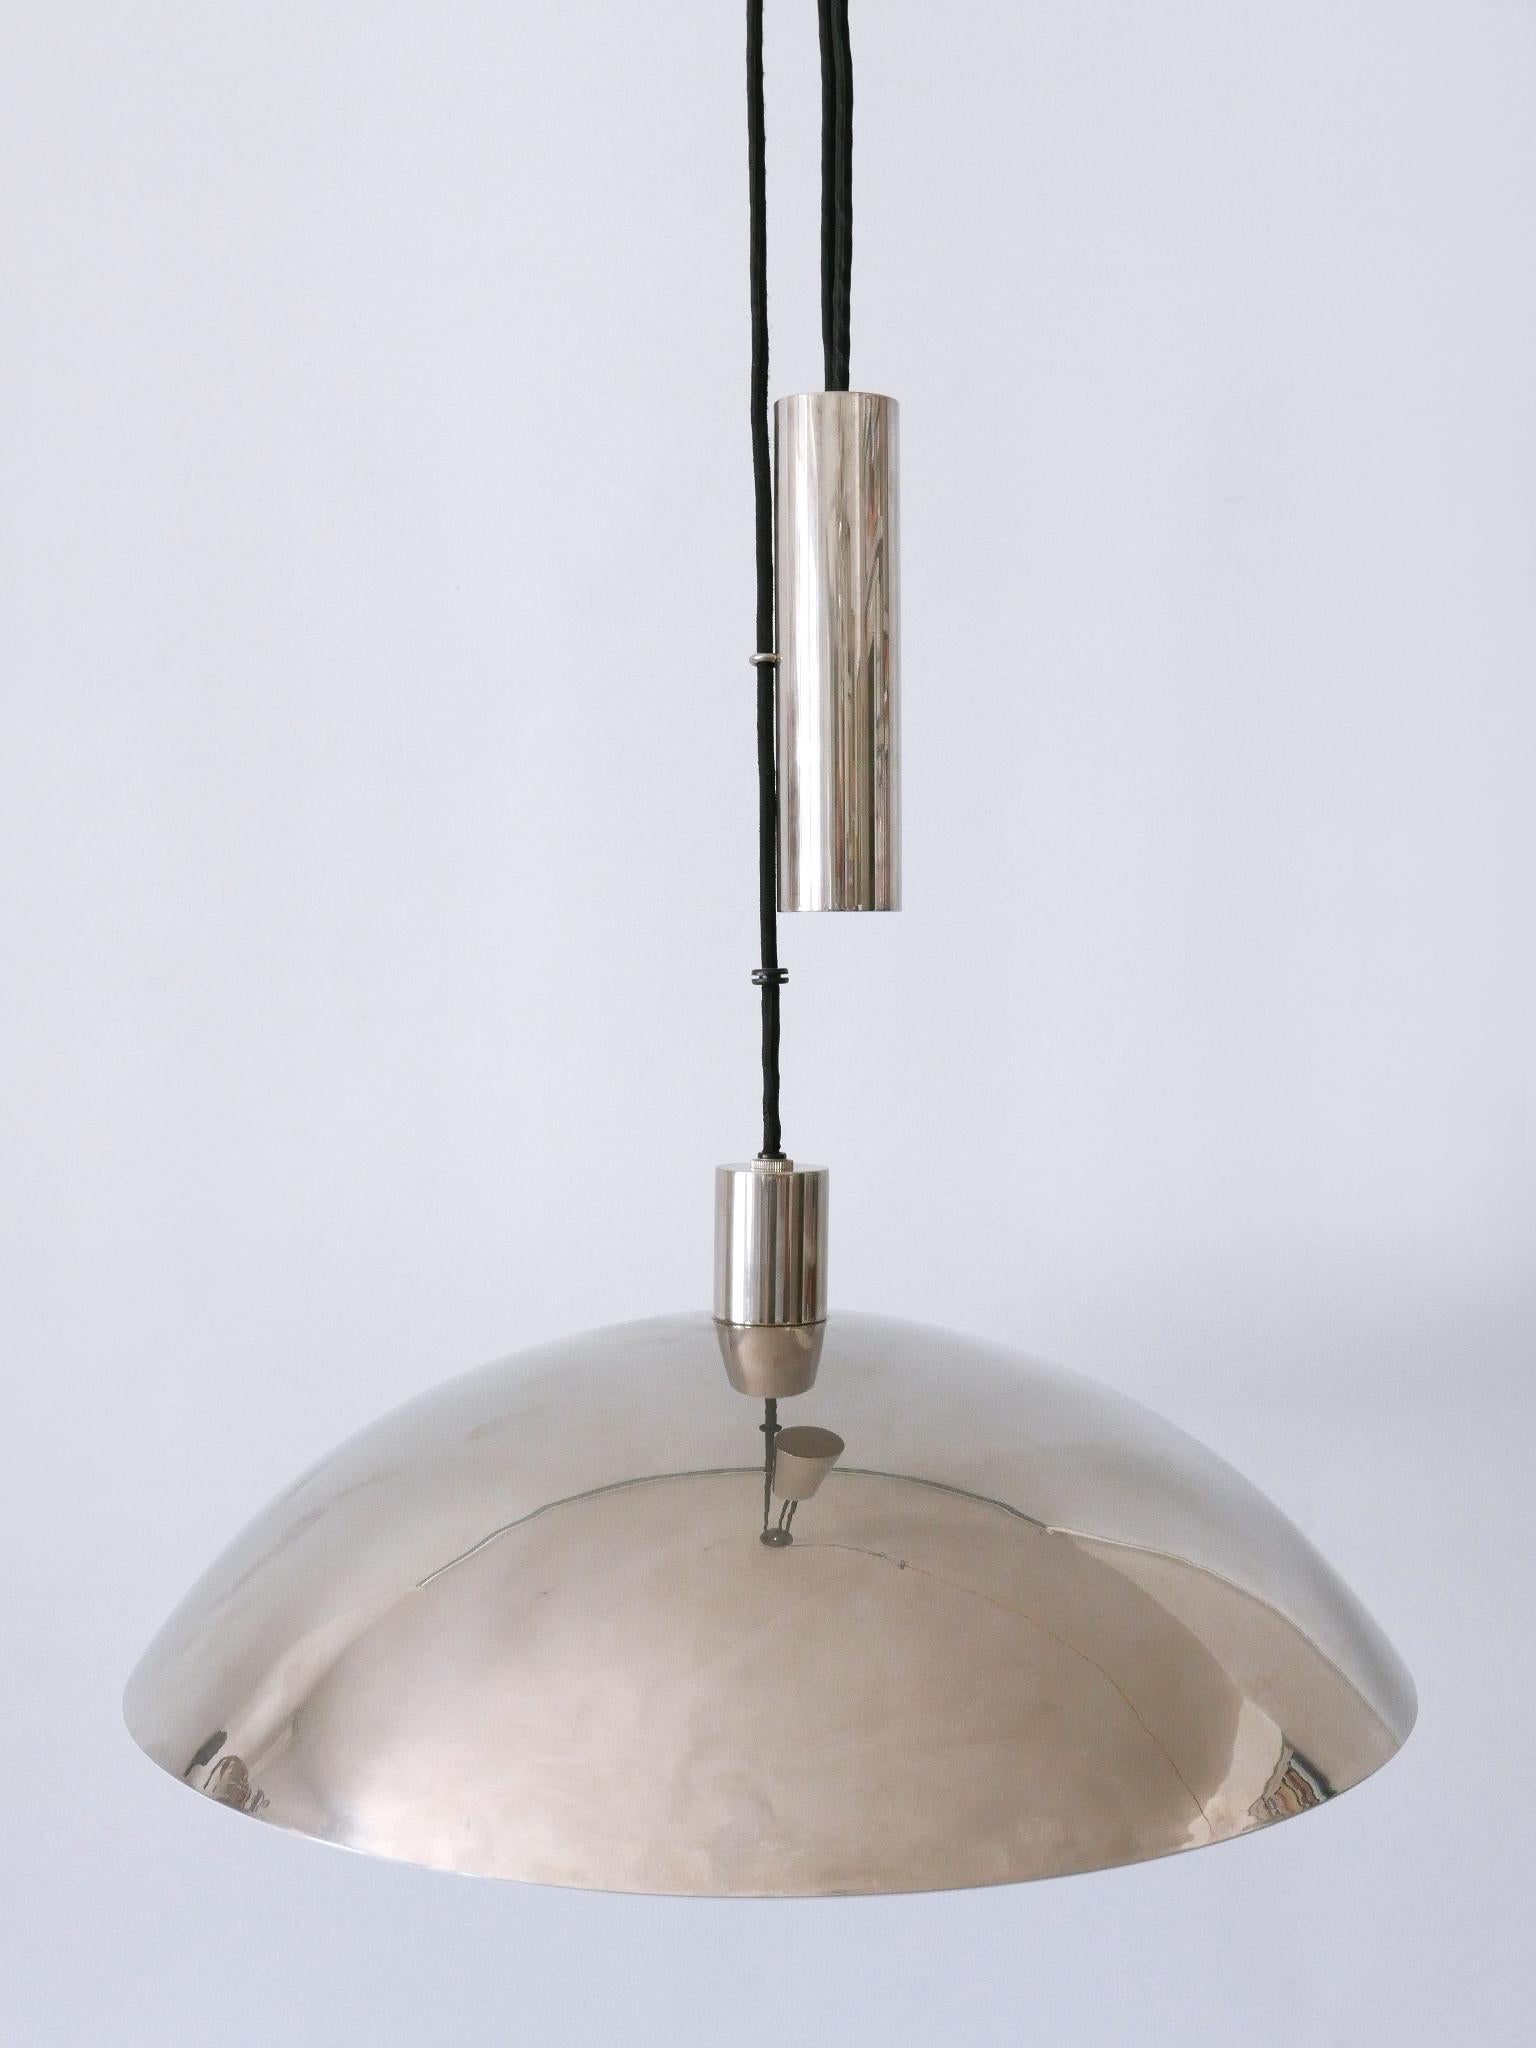 Early Tecnolumen Pendant Lamp 'Bauhaus HMB 25/500' by Marianne Brandt 1980s For Sale 2